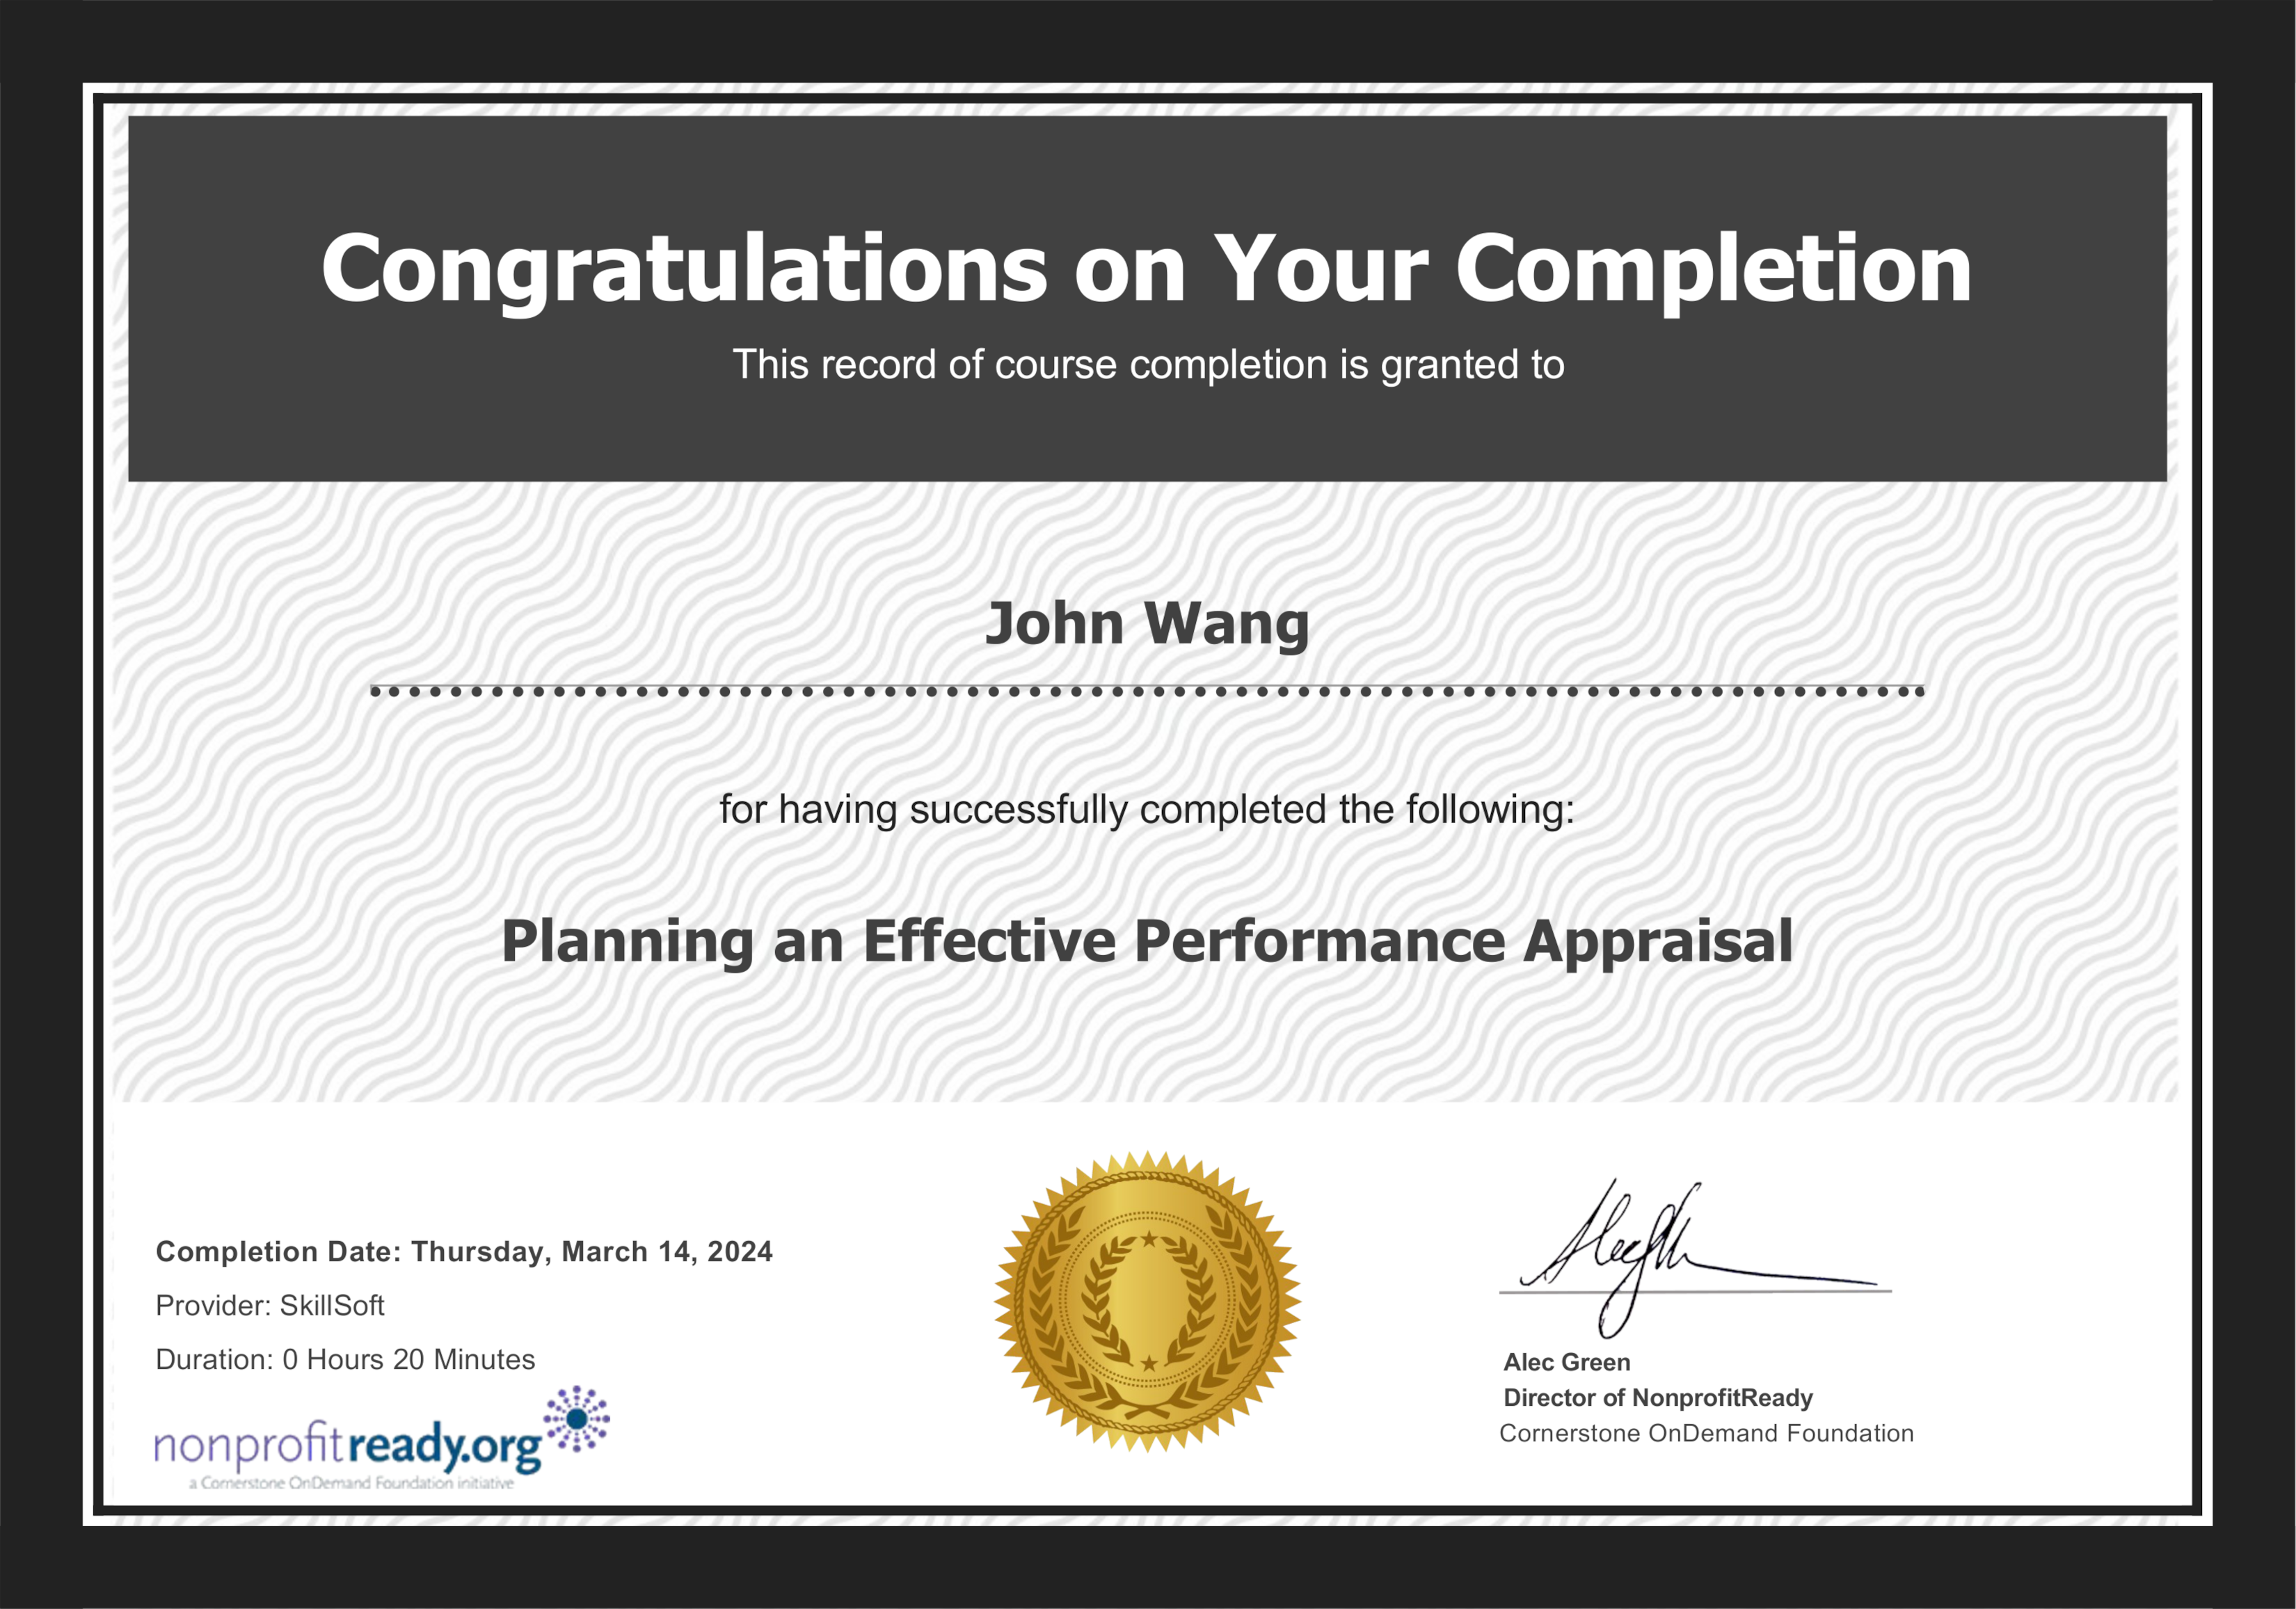 John's Planning an Effective Performance Appraisal from SkillSoft